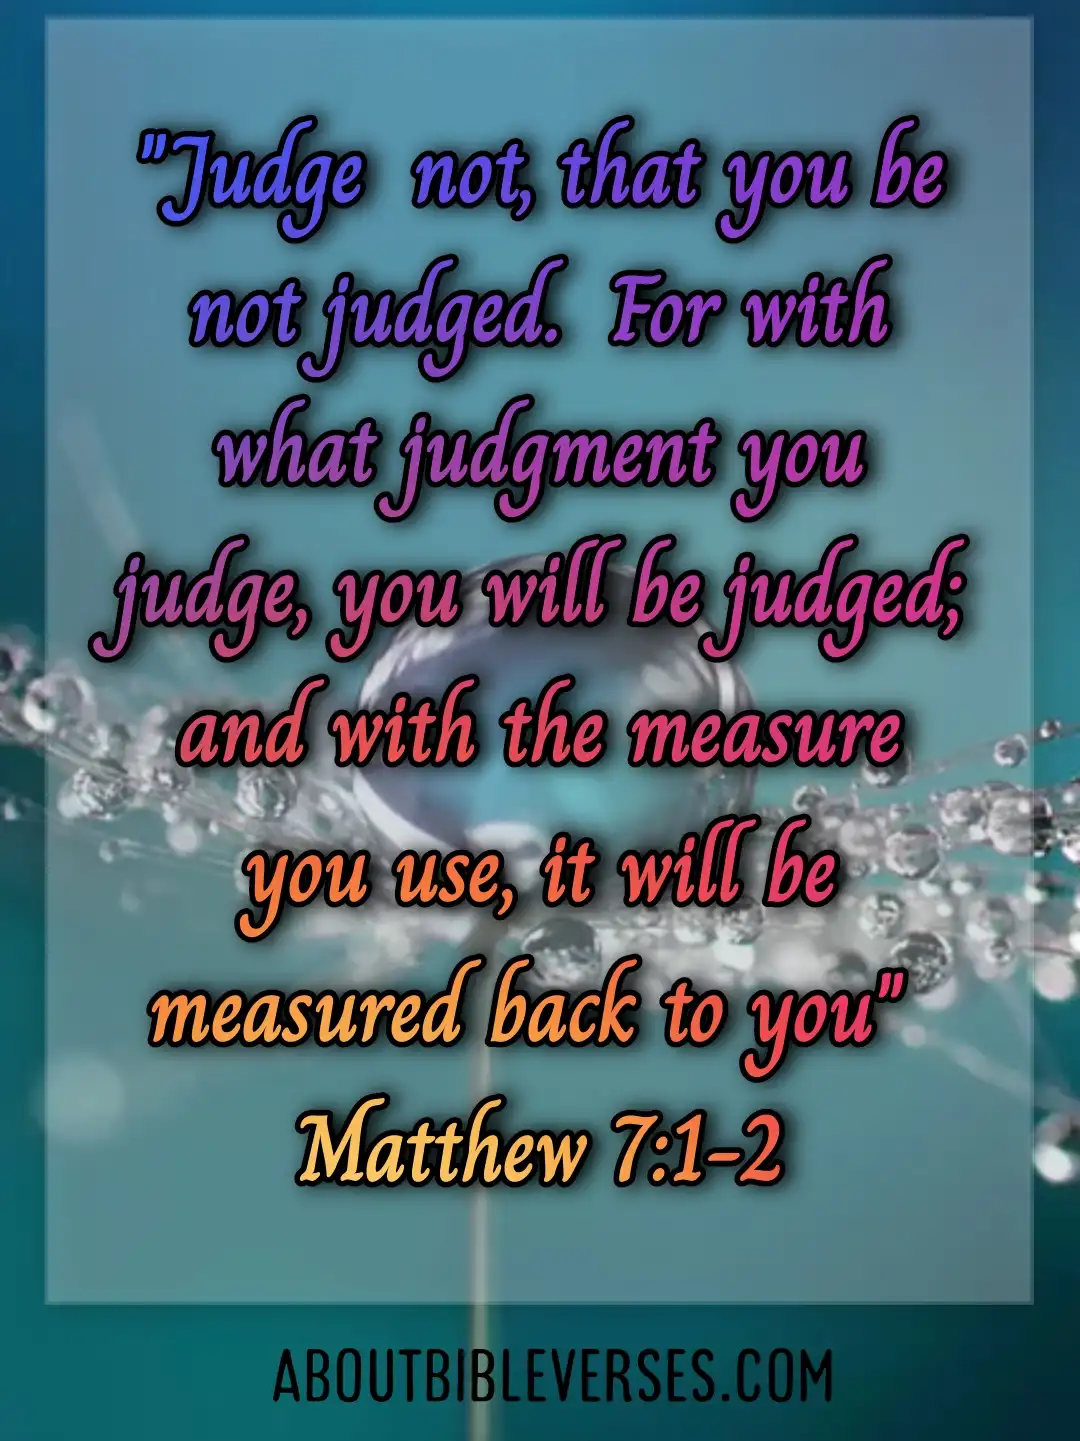 today bible verse (Matthew 7:1-2)